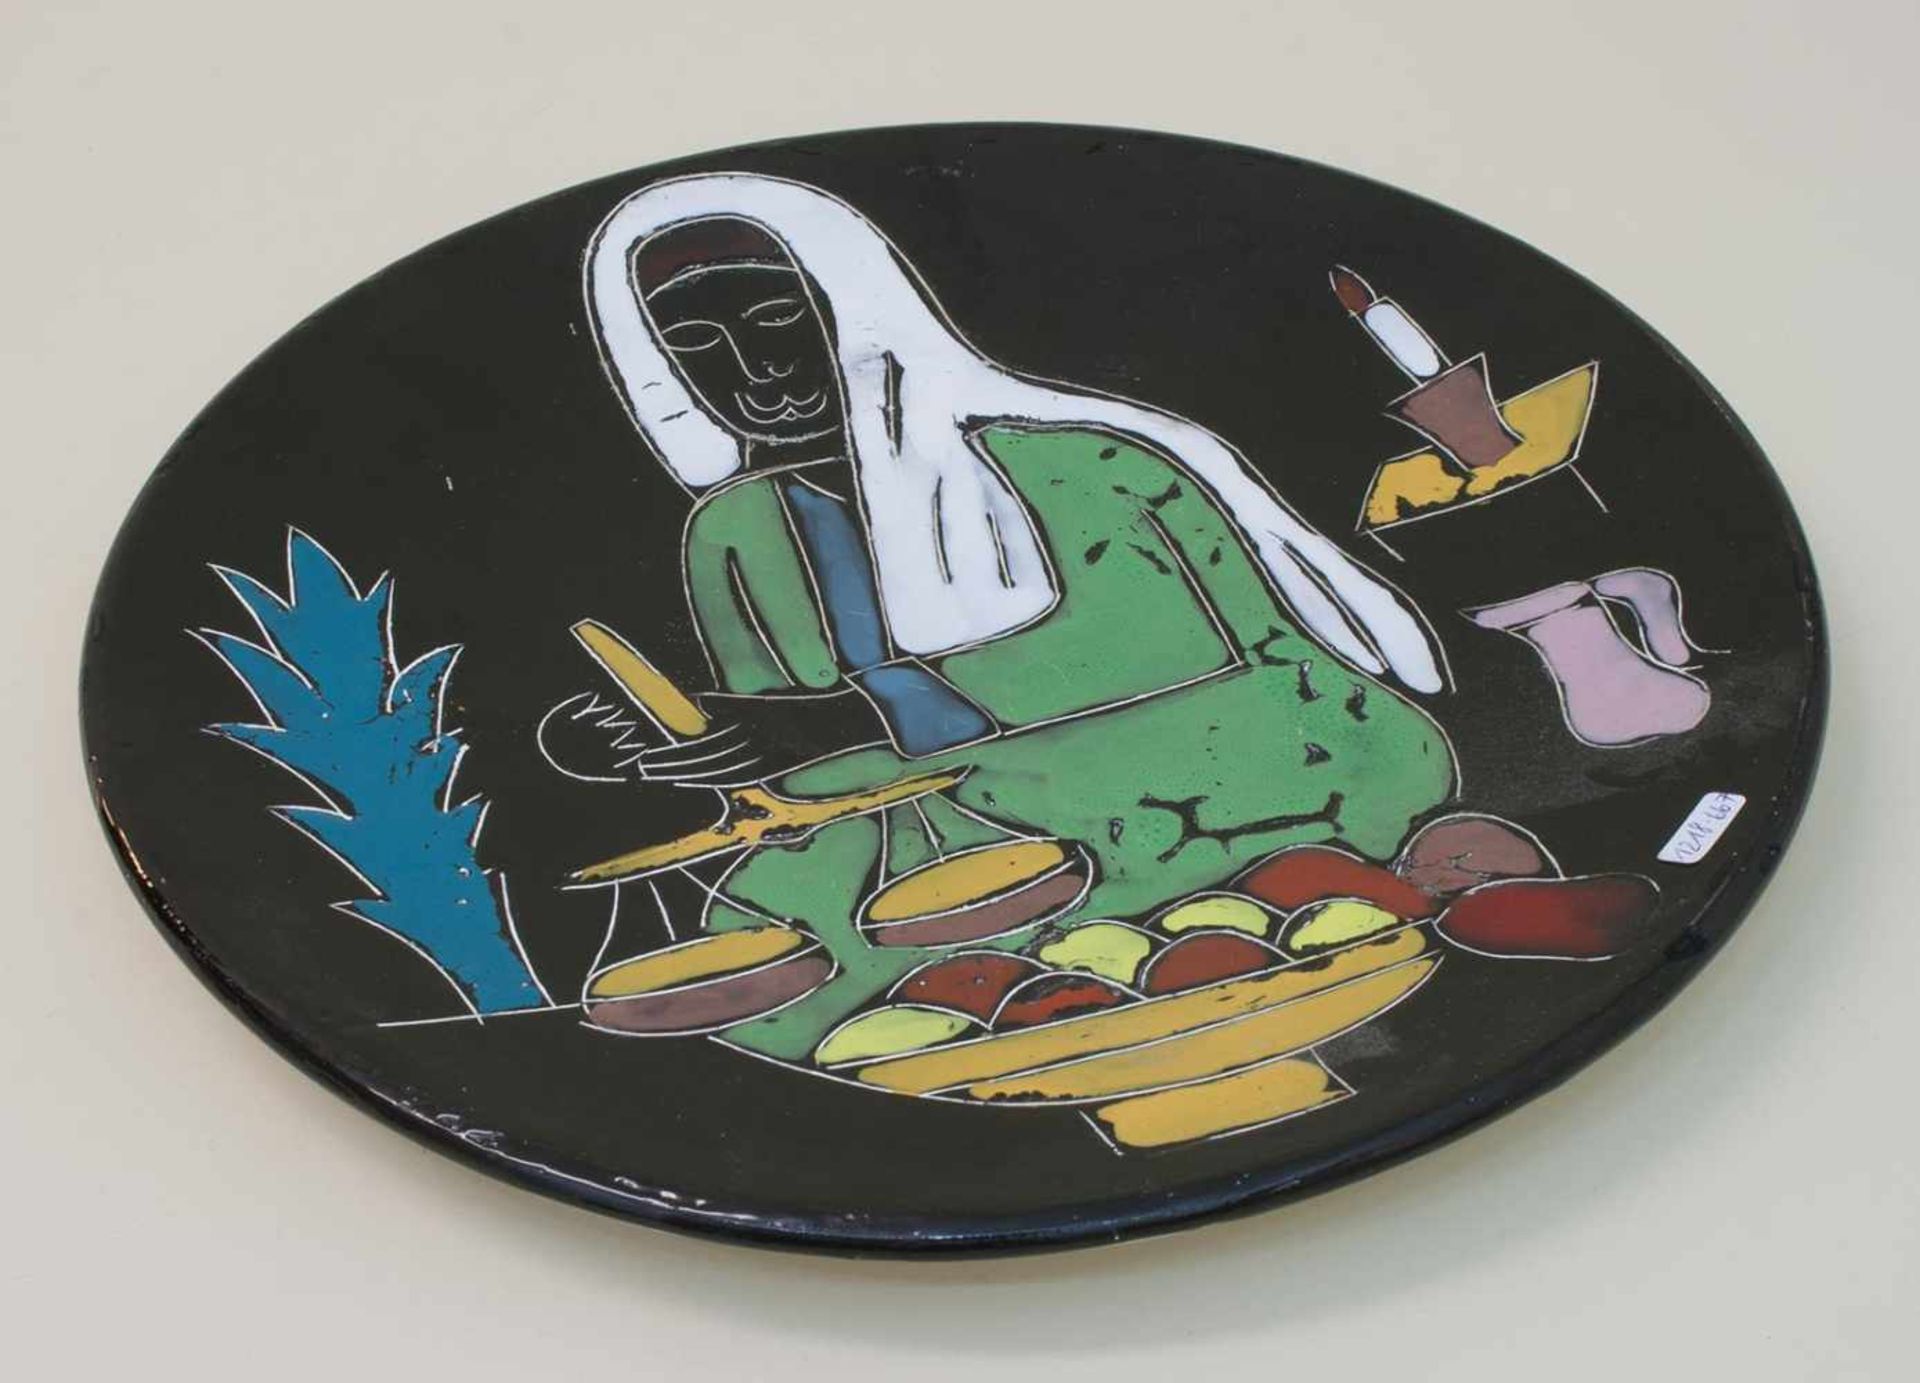 Großer Teller wohl marokkanisch, 1970er Jahre, Keramik, polychrom handbemalt